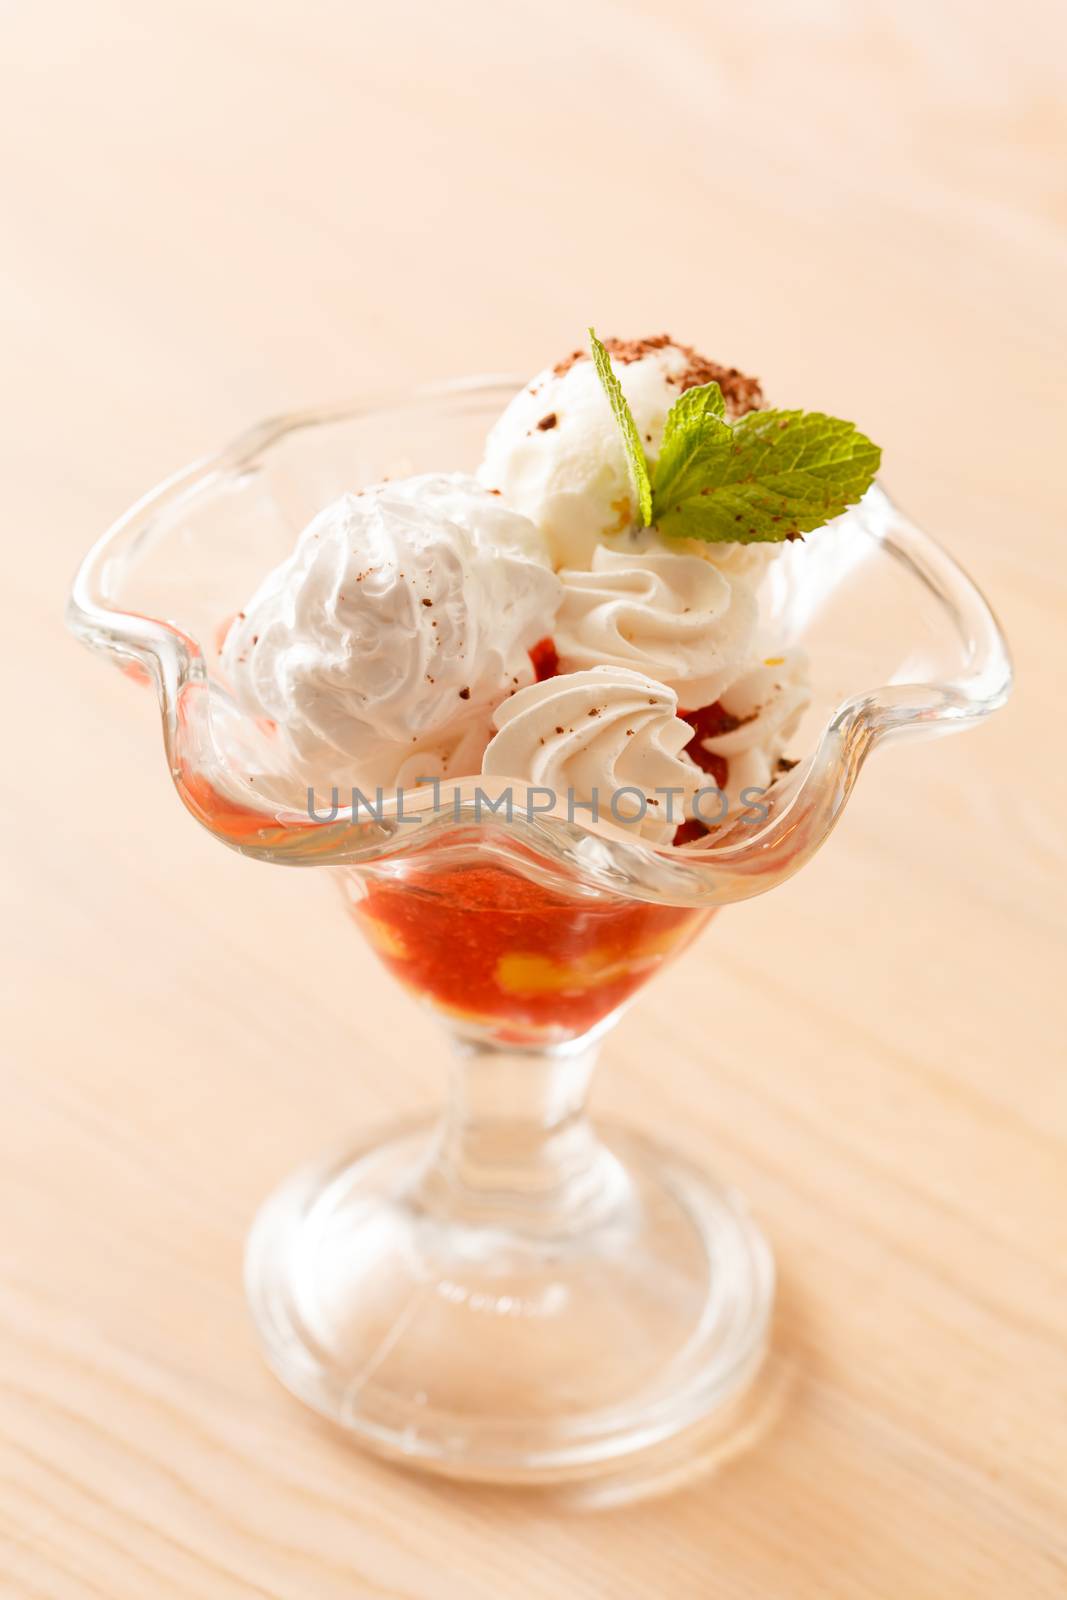 dessert with ice cream